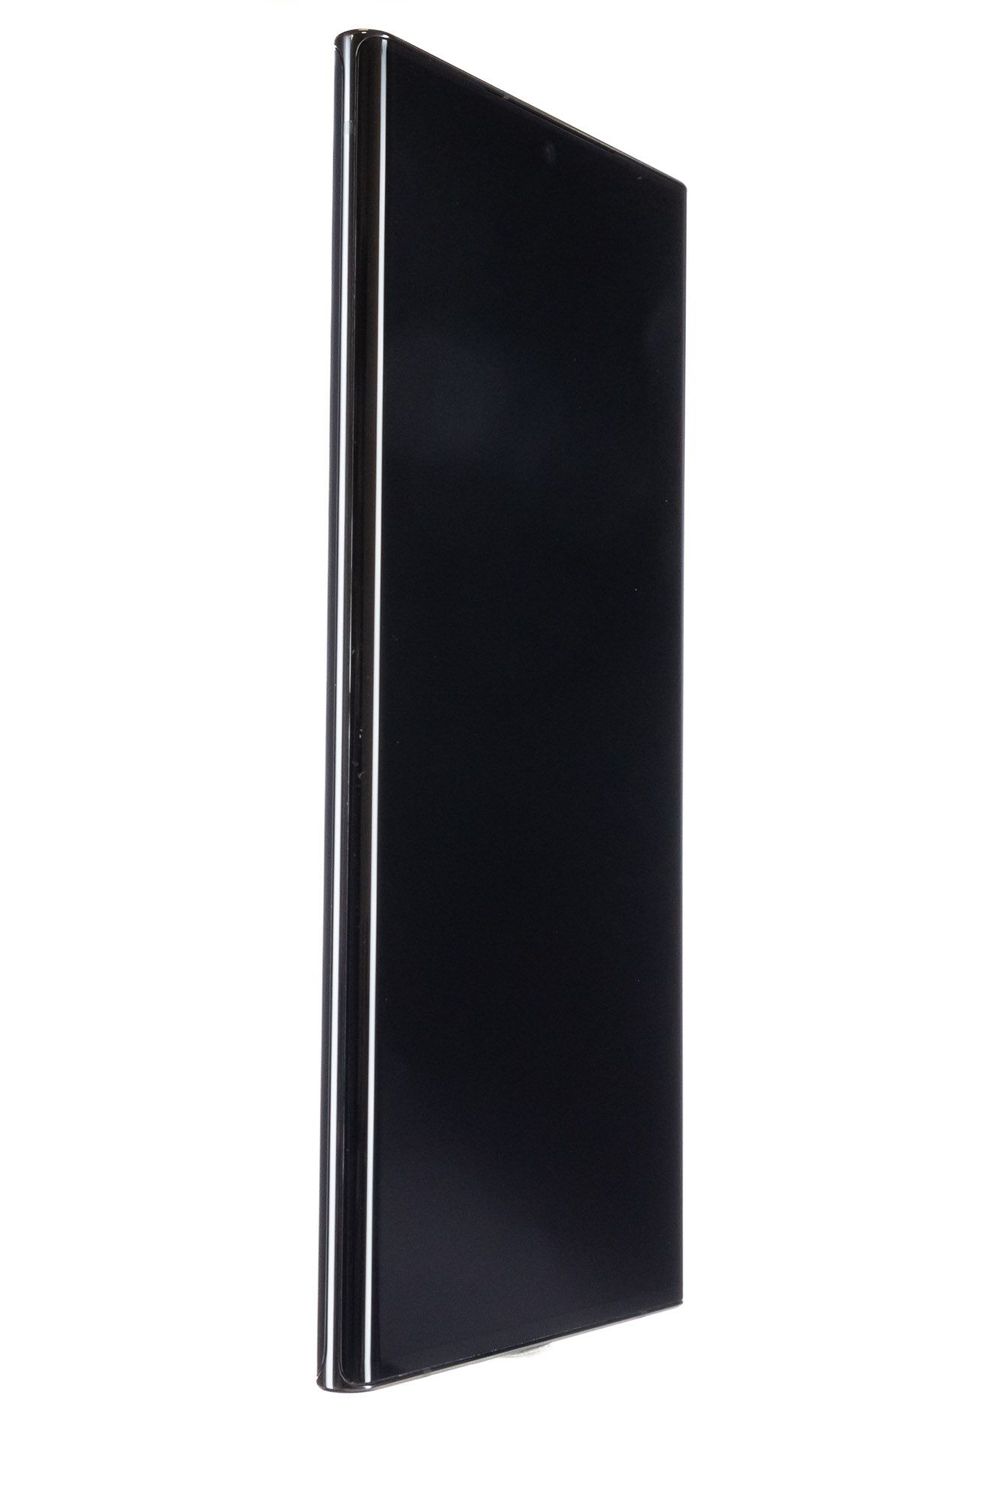 Mobiltelefon Samsung Galaxy Note 20 Ultra 5G, Black, 256 GB, Foarte Bun